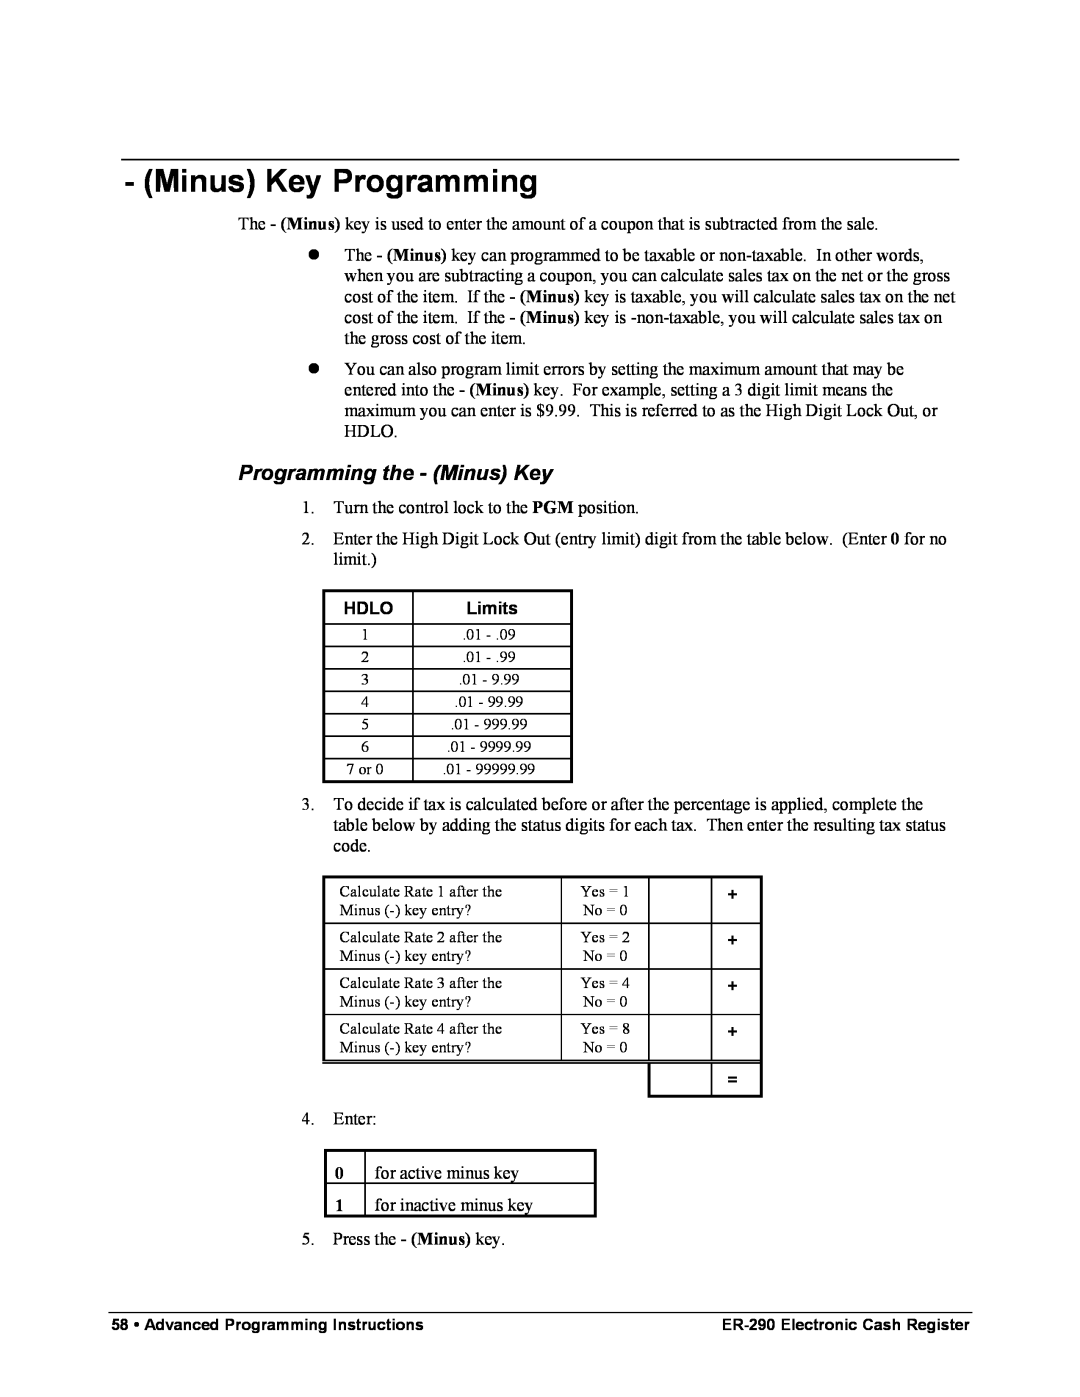 Samsung M-ER290 specifications Minus Key Programming, Programming the - Minus Key, Hdlo, Limits 